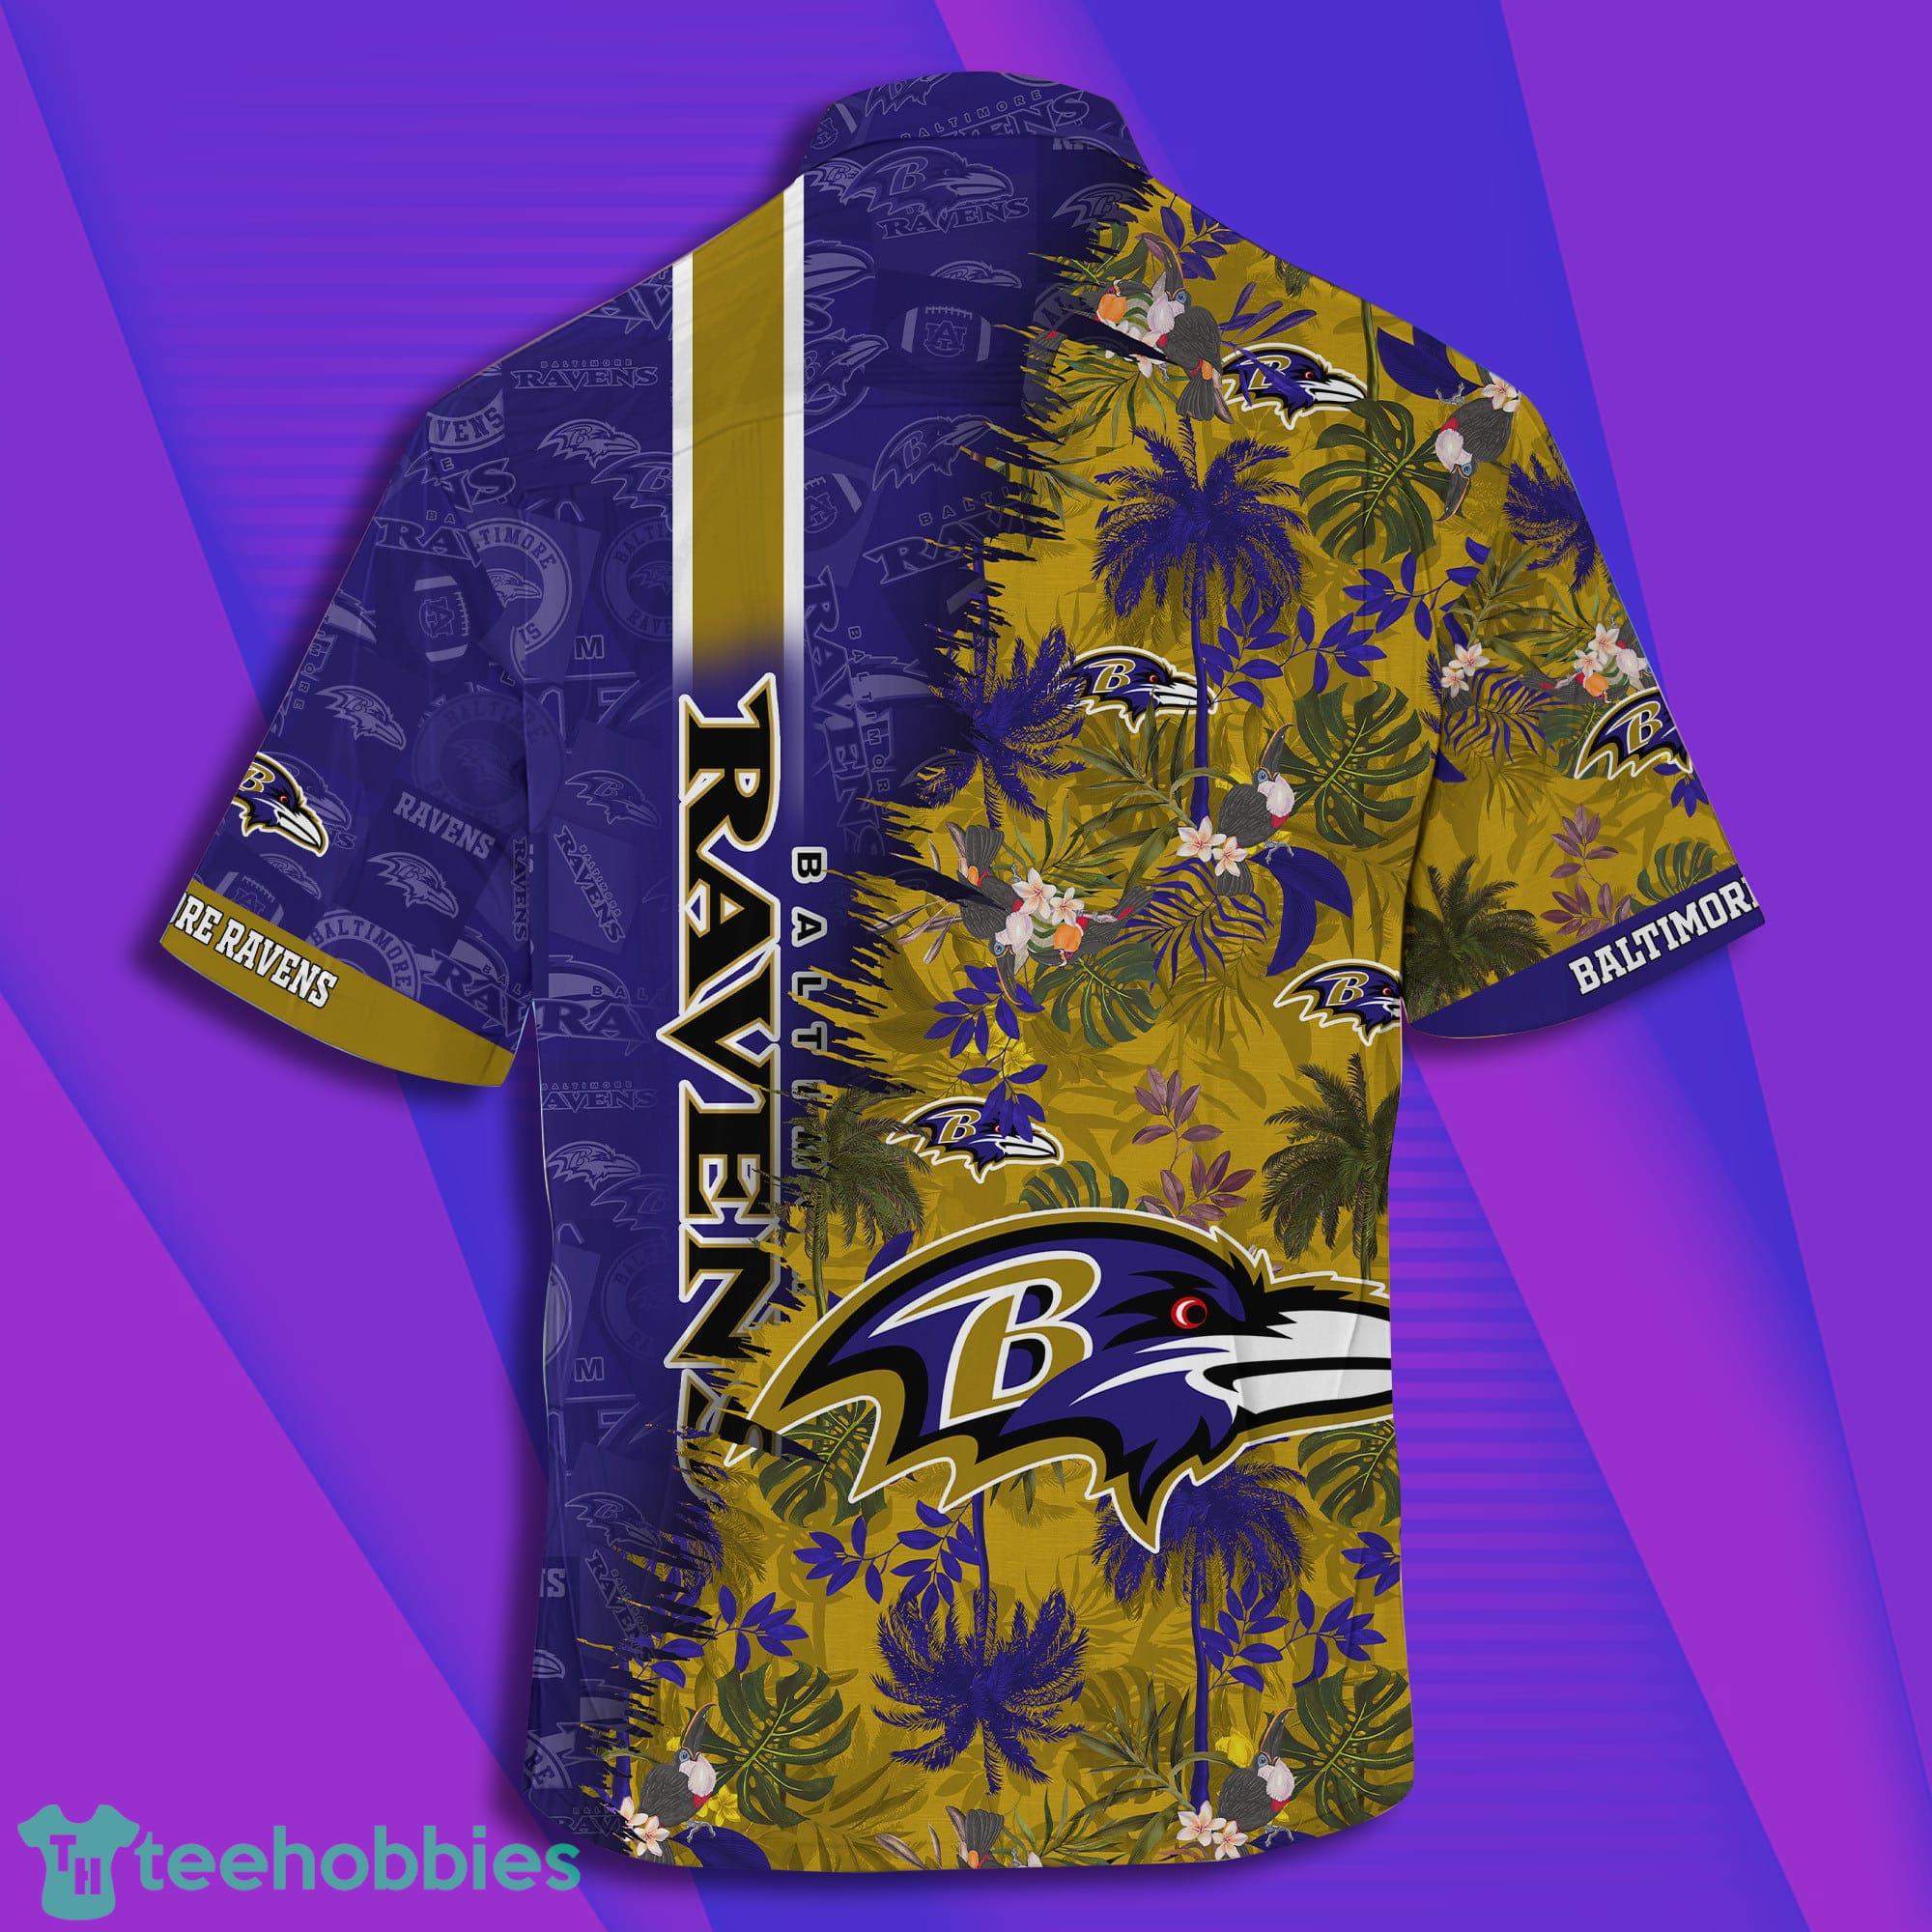 Baltimore Ravens Louis Vuitton LV NFL Custom Hawaiian Shirt - Tagotee